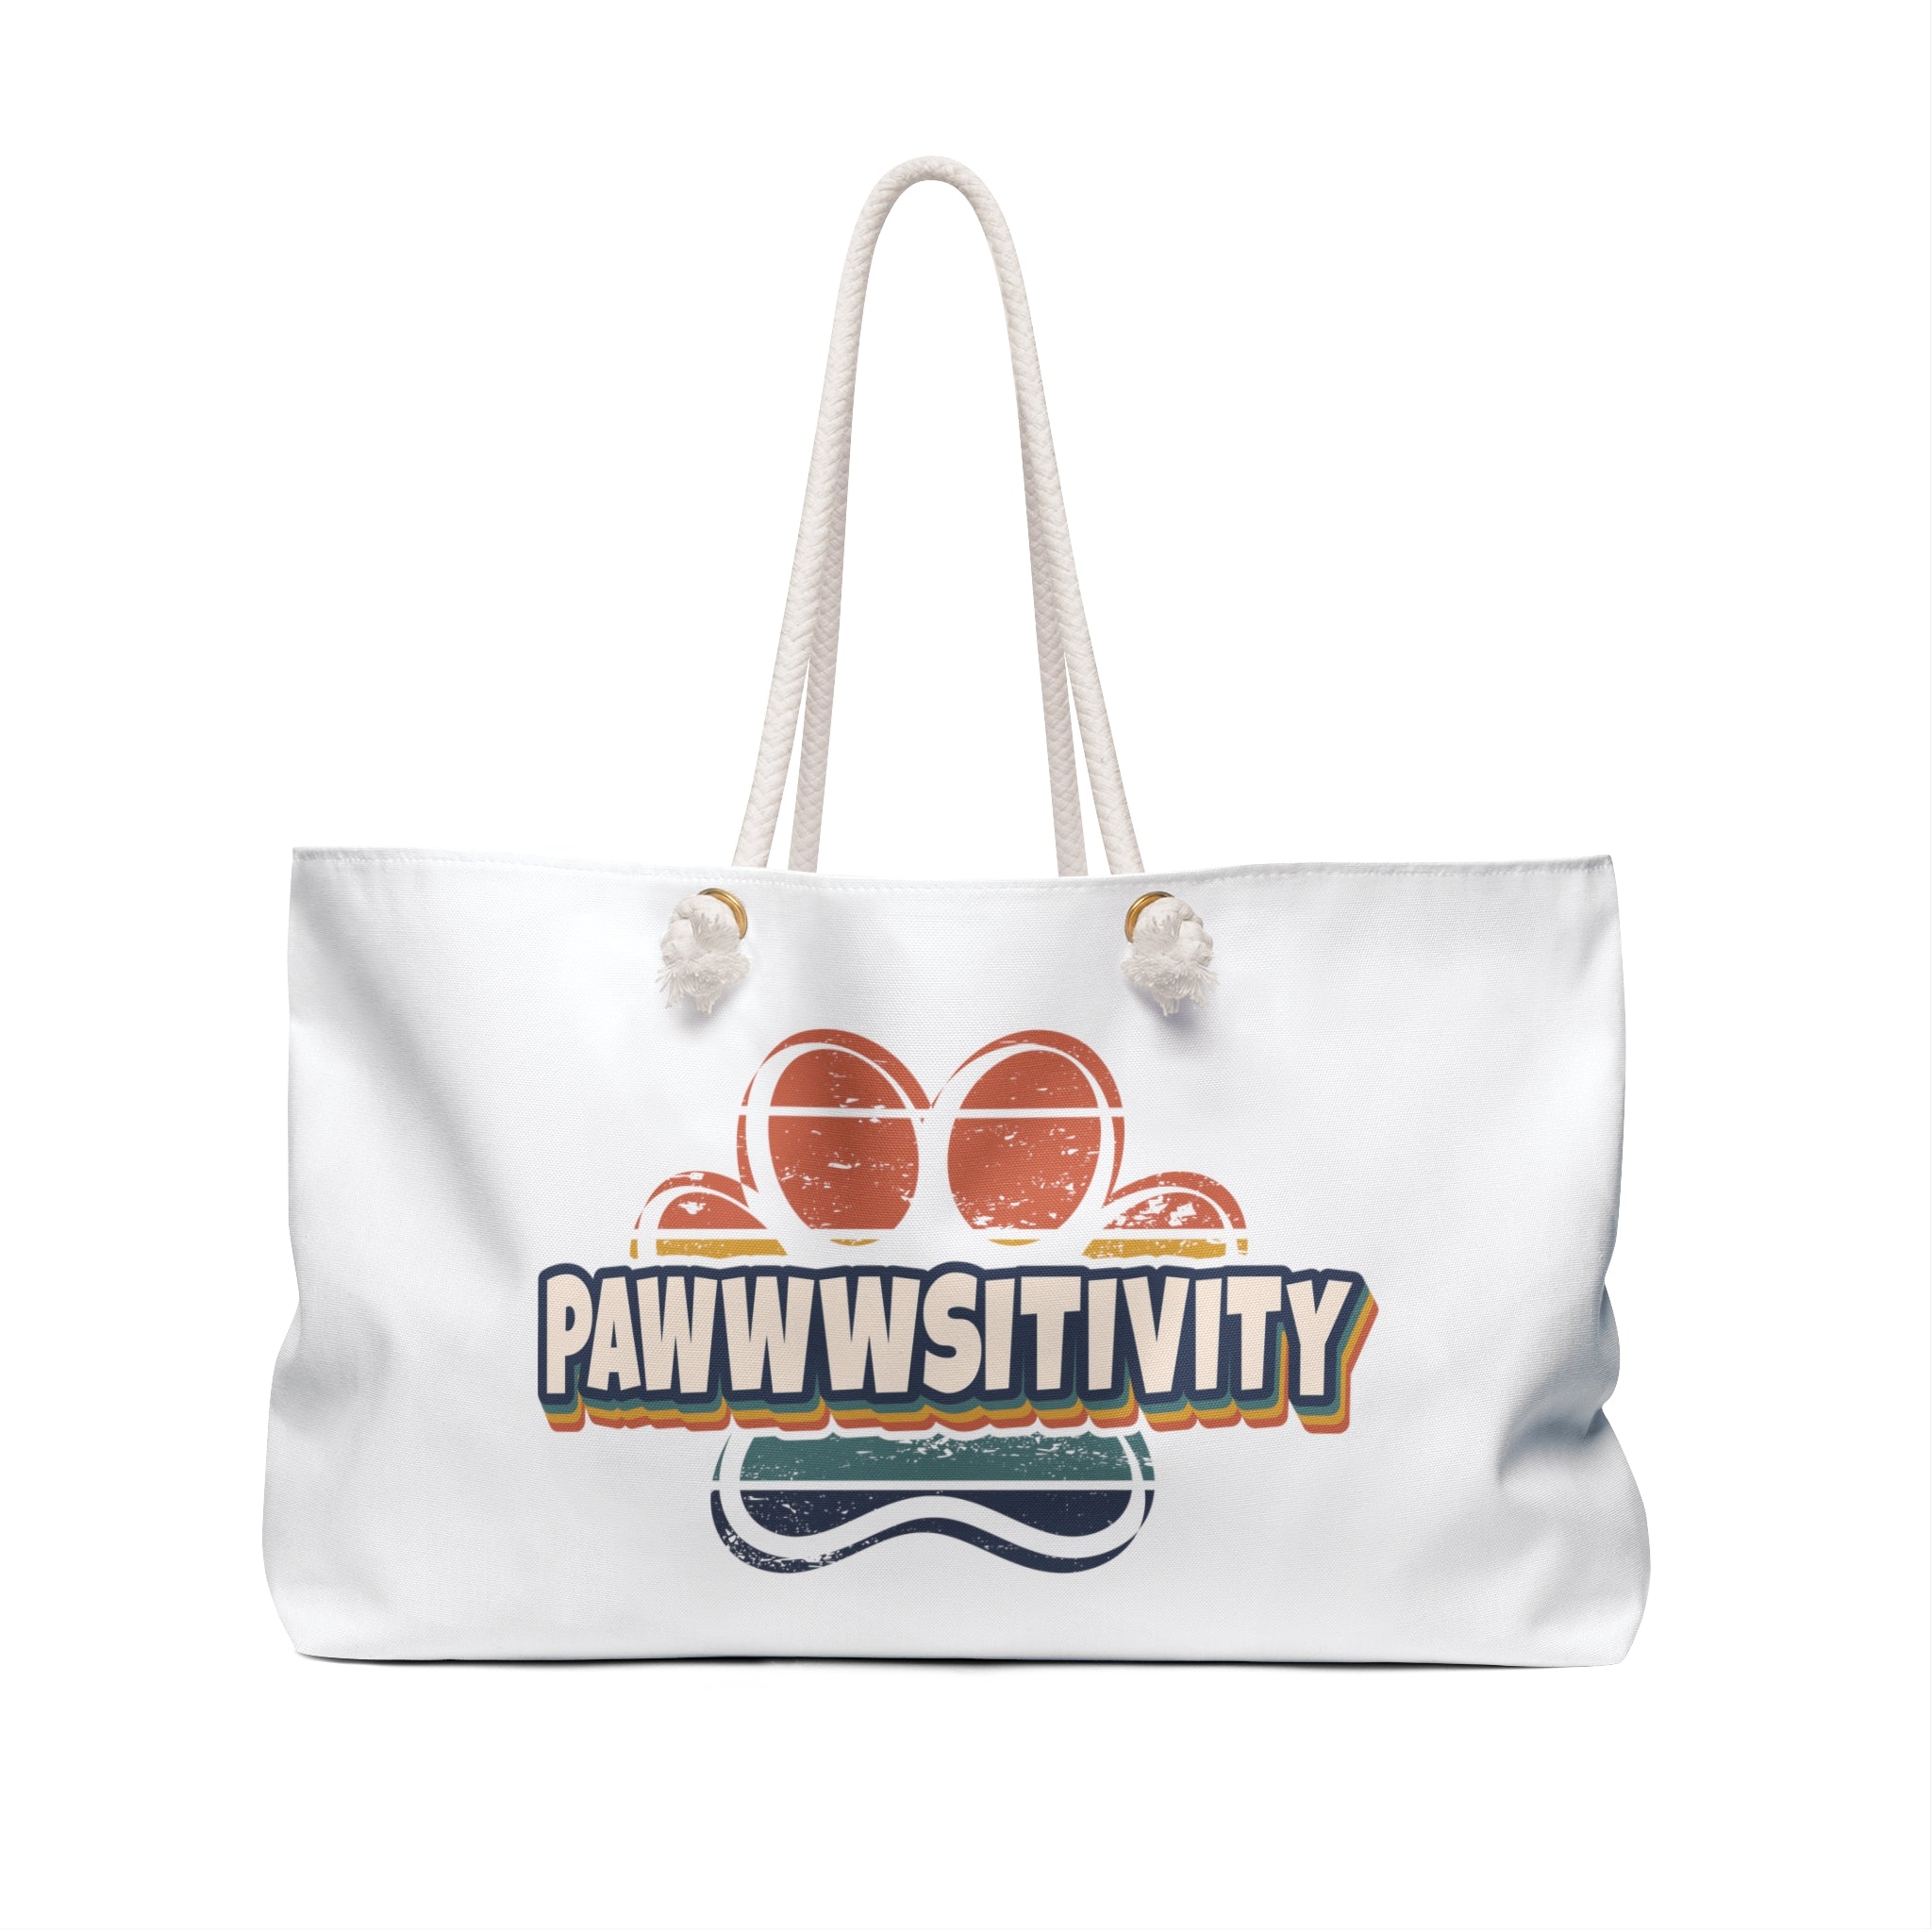 Pawwwsitivity Weekender Bag